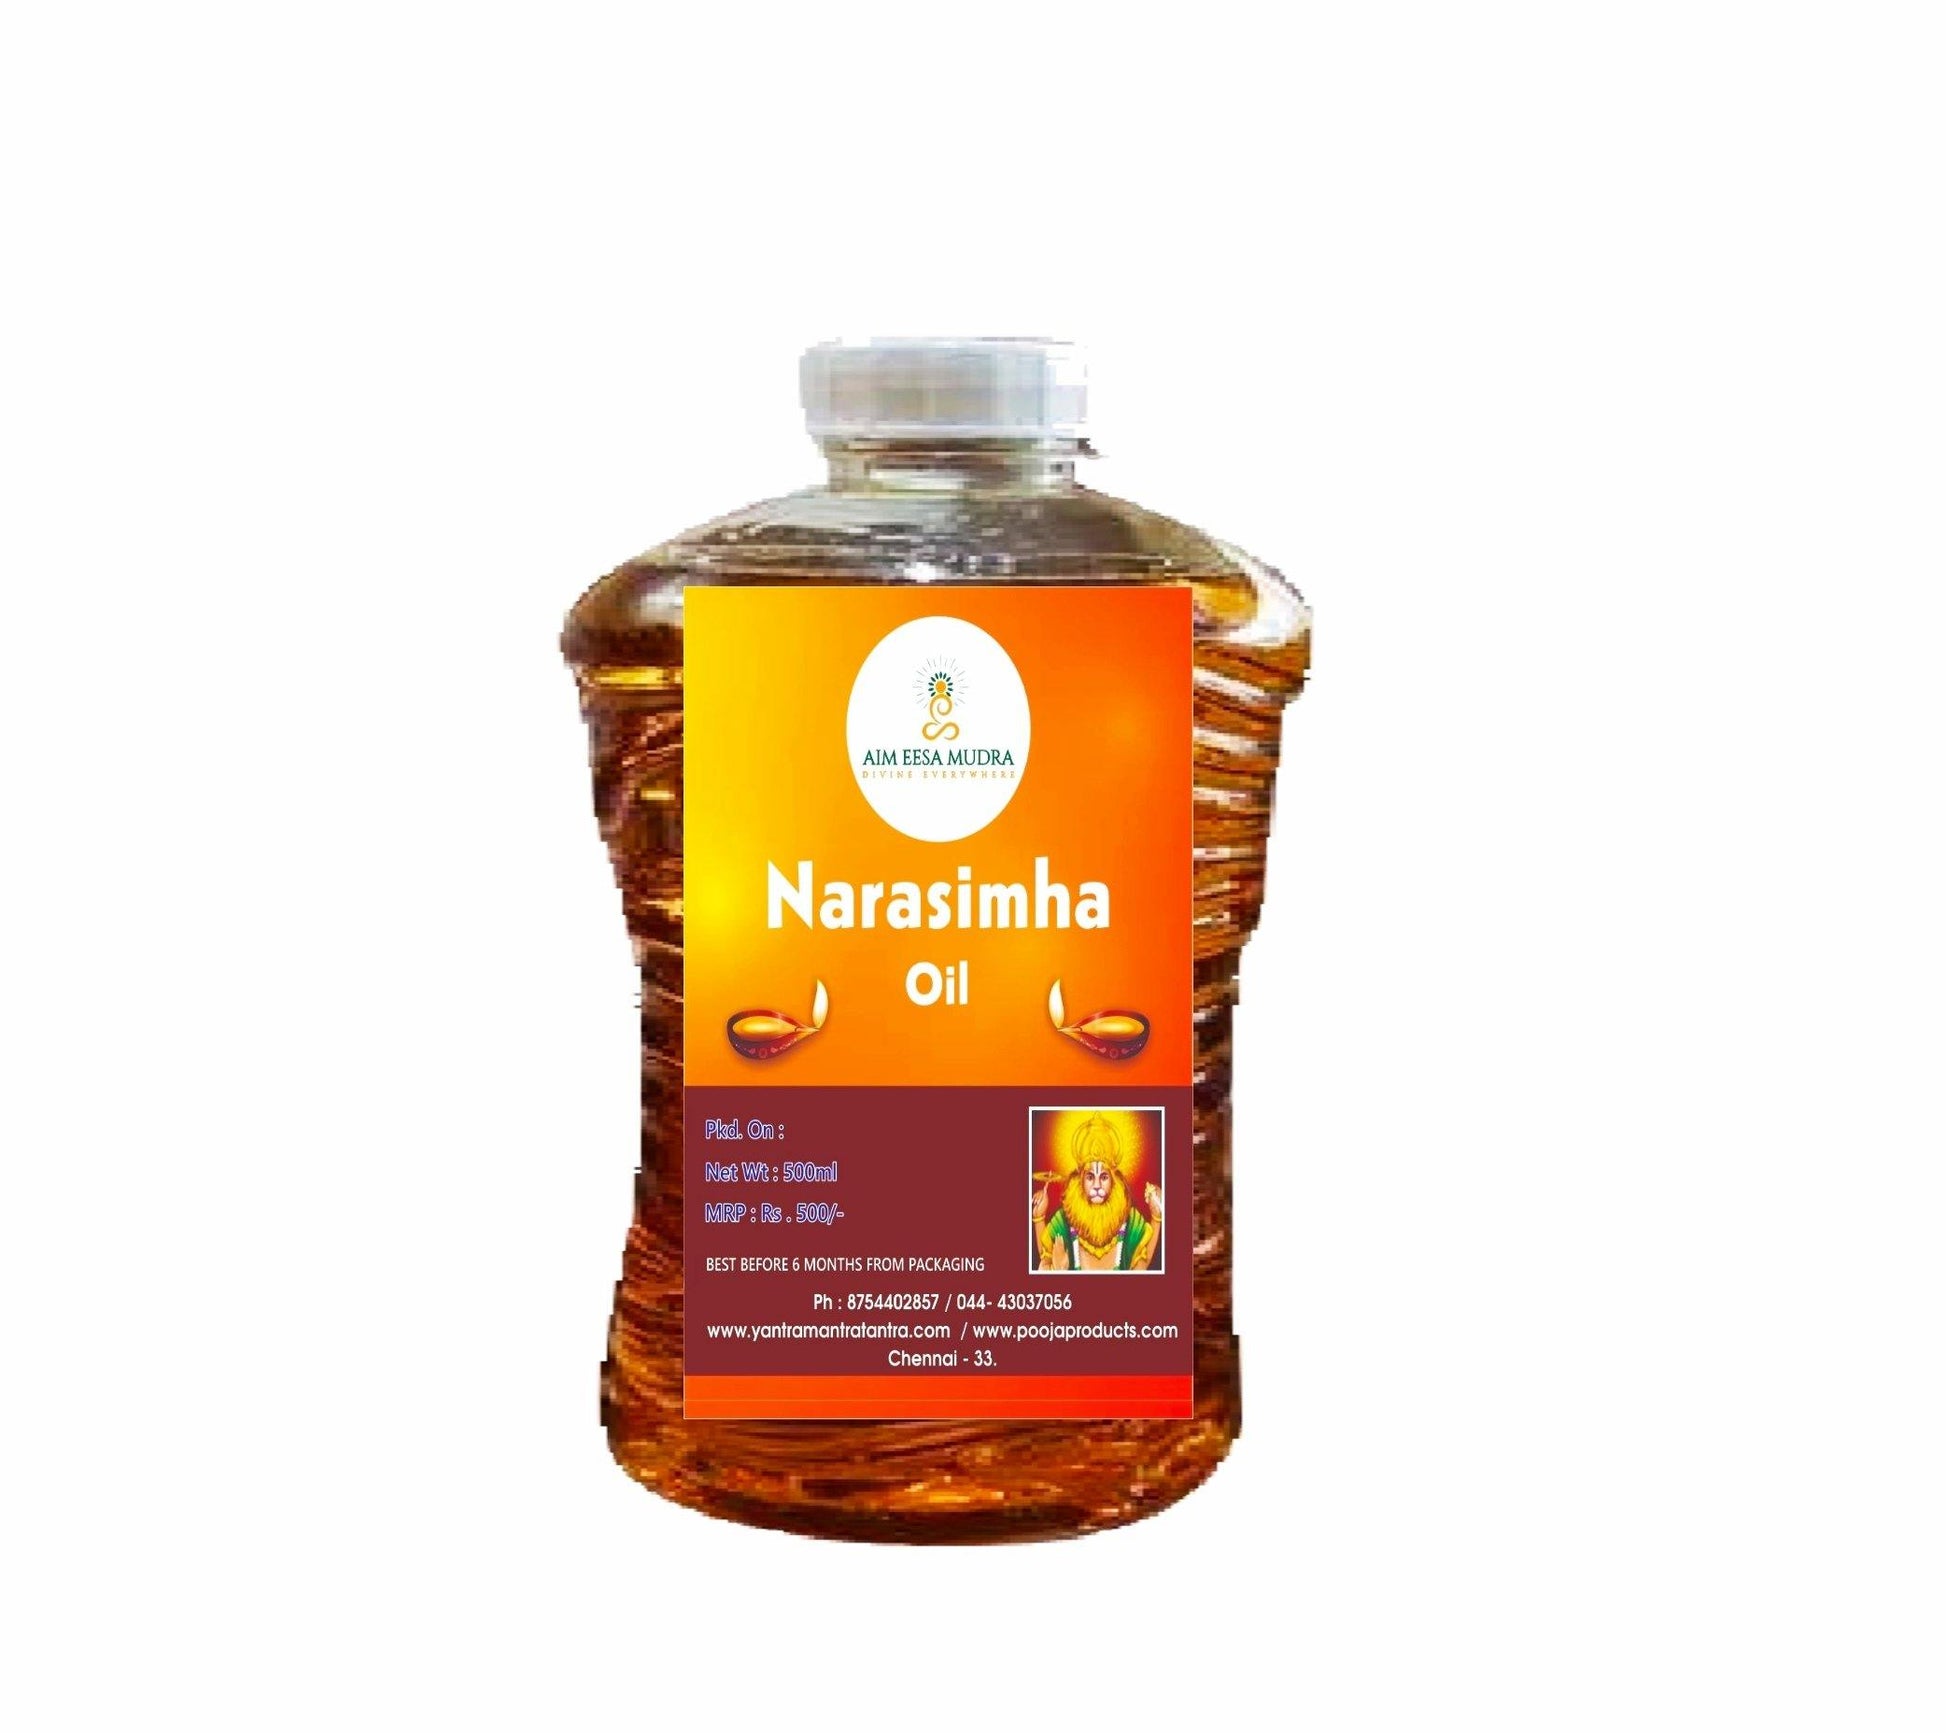 Narasimha  Oil (500ml)  (𝗧𝗛𝗜𝗦 𝗣𝗥𝗢𝗗𝗨𝗖𝗧 𝗔𝗩𝗔𝗜𝗟𝗕𝗟𝗘 𝗢𝗡𝗟𝗬 𝗜𝗡𝗦𝗜𝗗𝗘 𝗜𝗡𝗗𝗜𝗔) - PoojaProducts.com